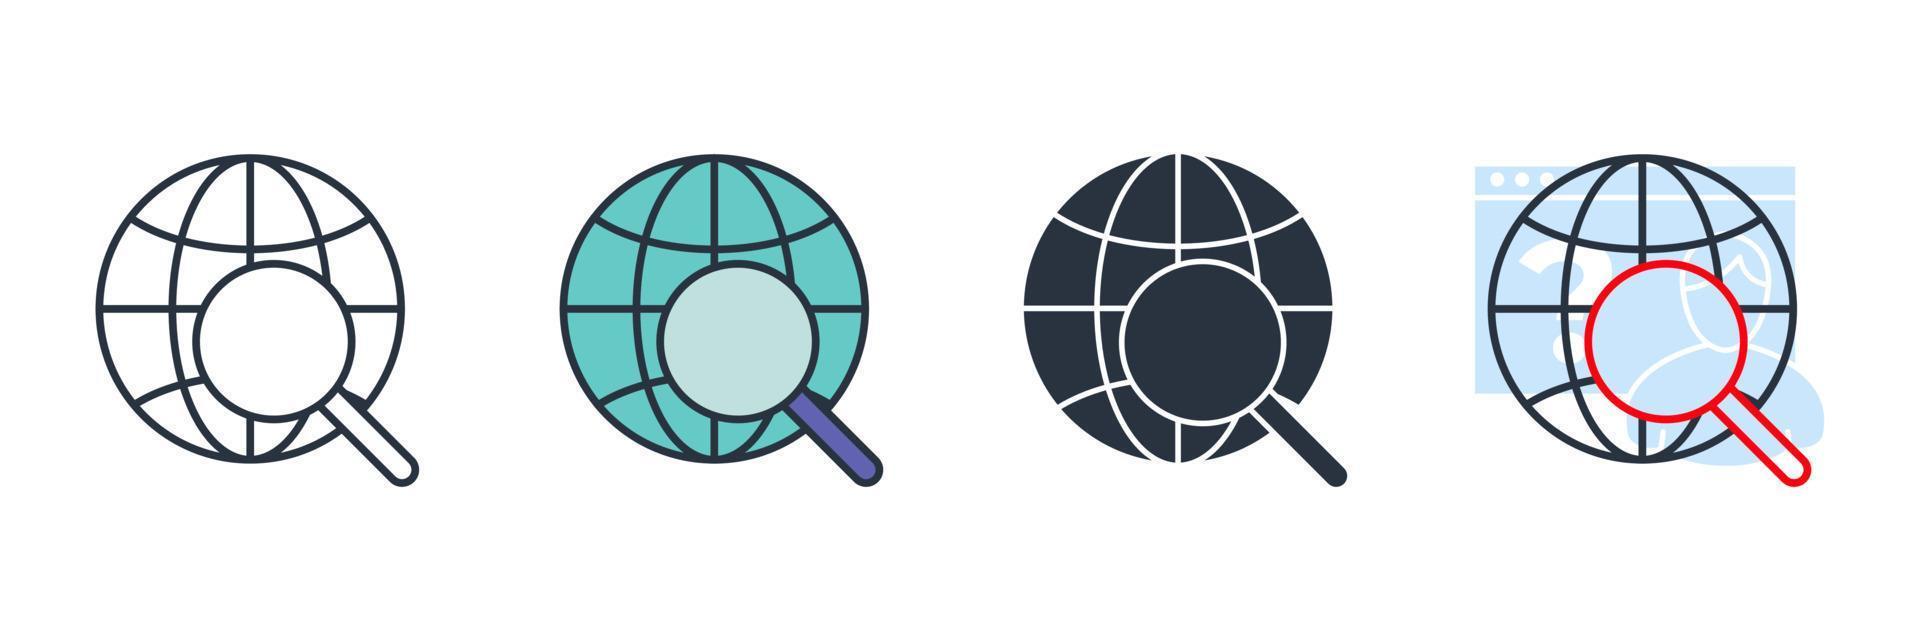 Magnify globe icon logo vector illustration. search globe symbol template for graphic and web design collection